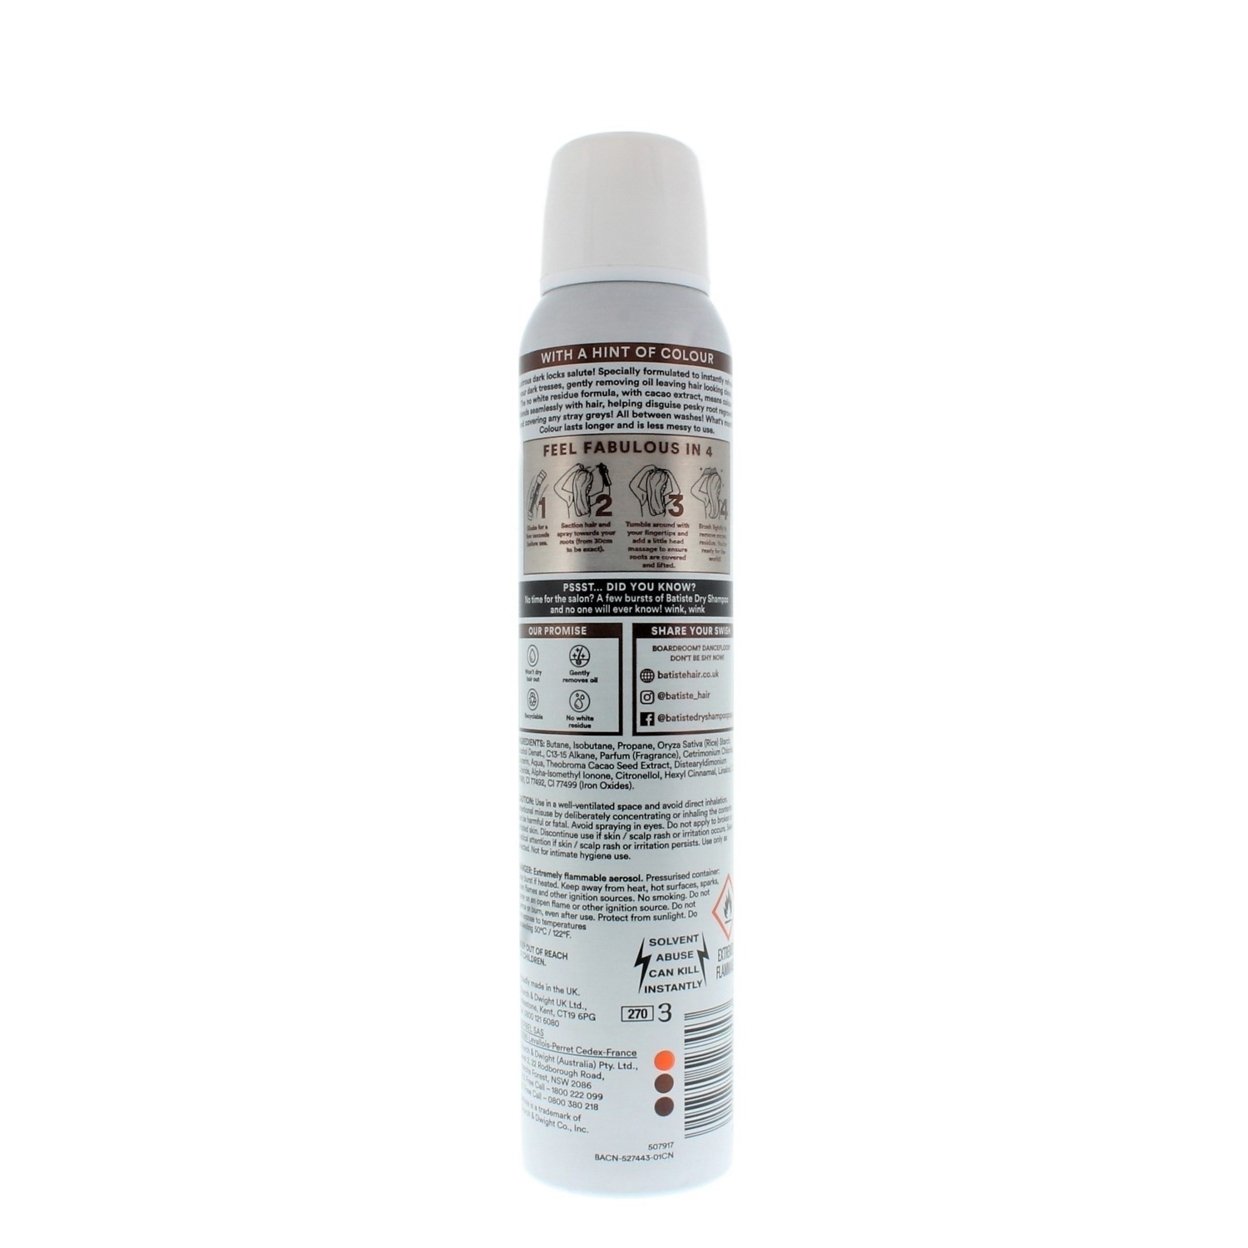 Batiste Instant Hair Refresh Colour Dry Shampoo Dark Hair 200ml/120g